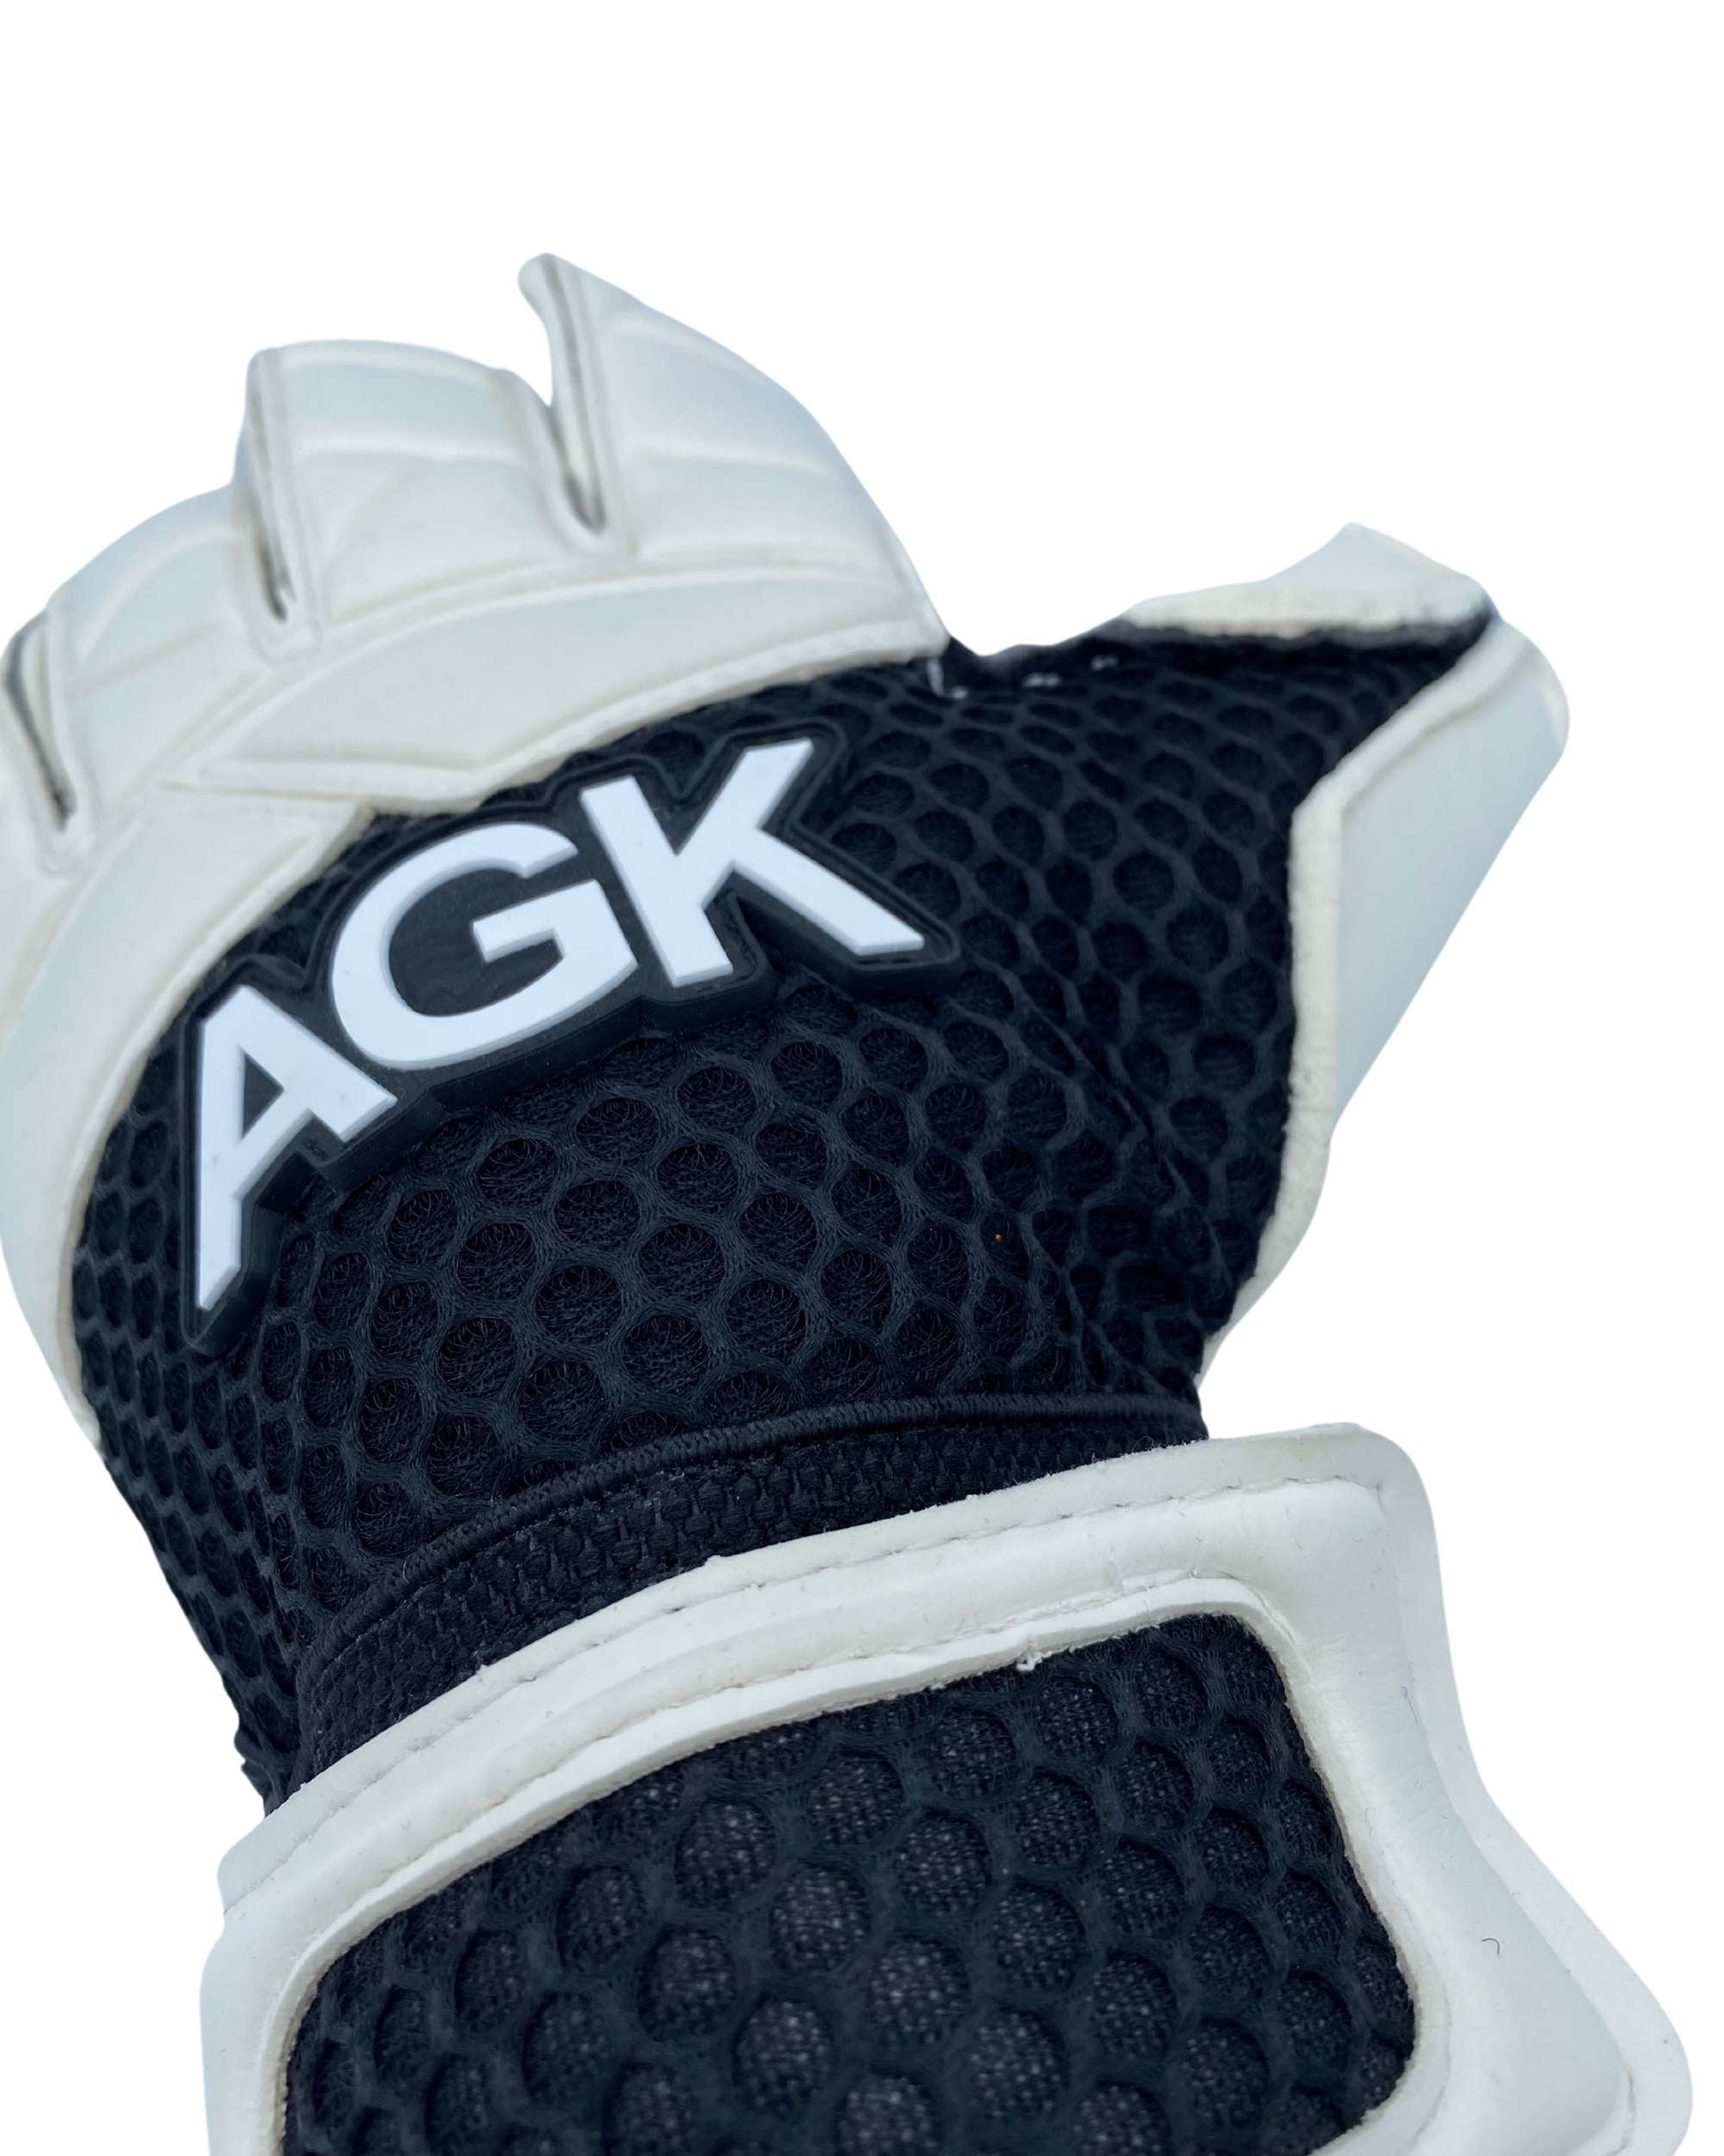 AGK Pro Virtuoso - Advantage Goalkeeping